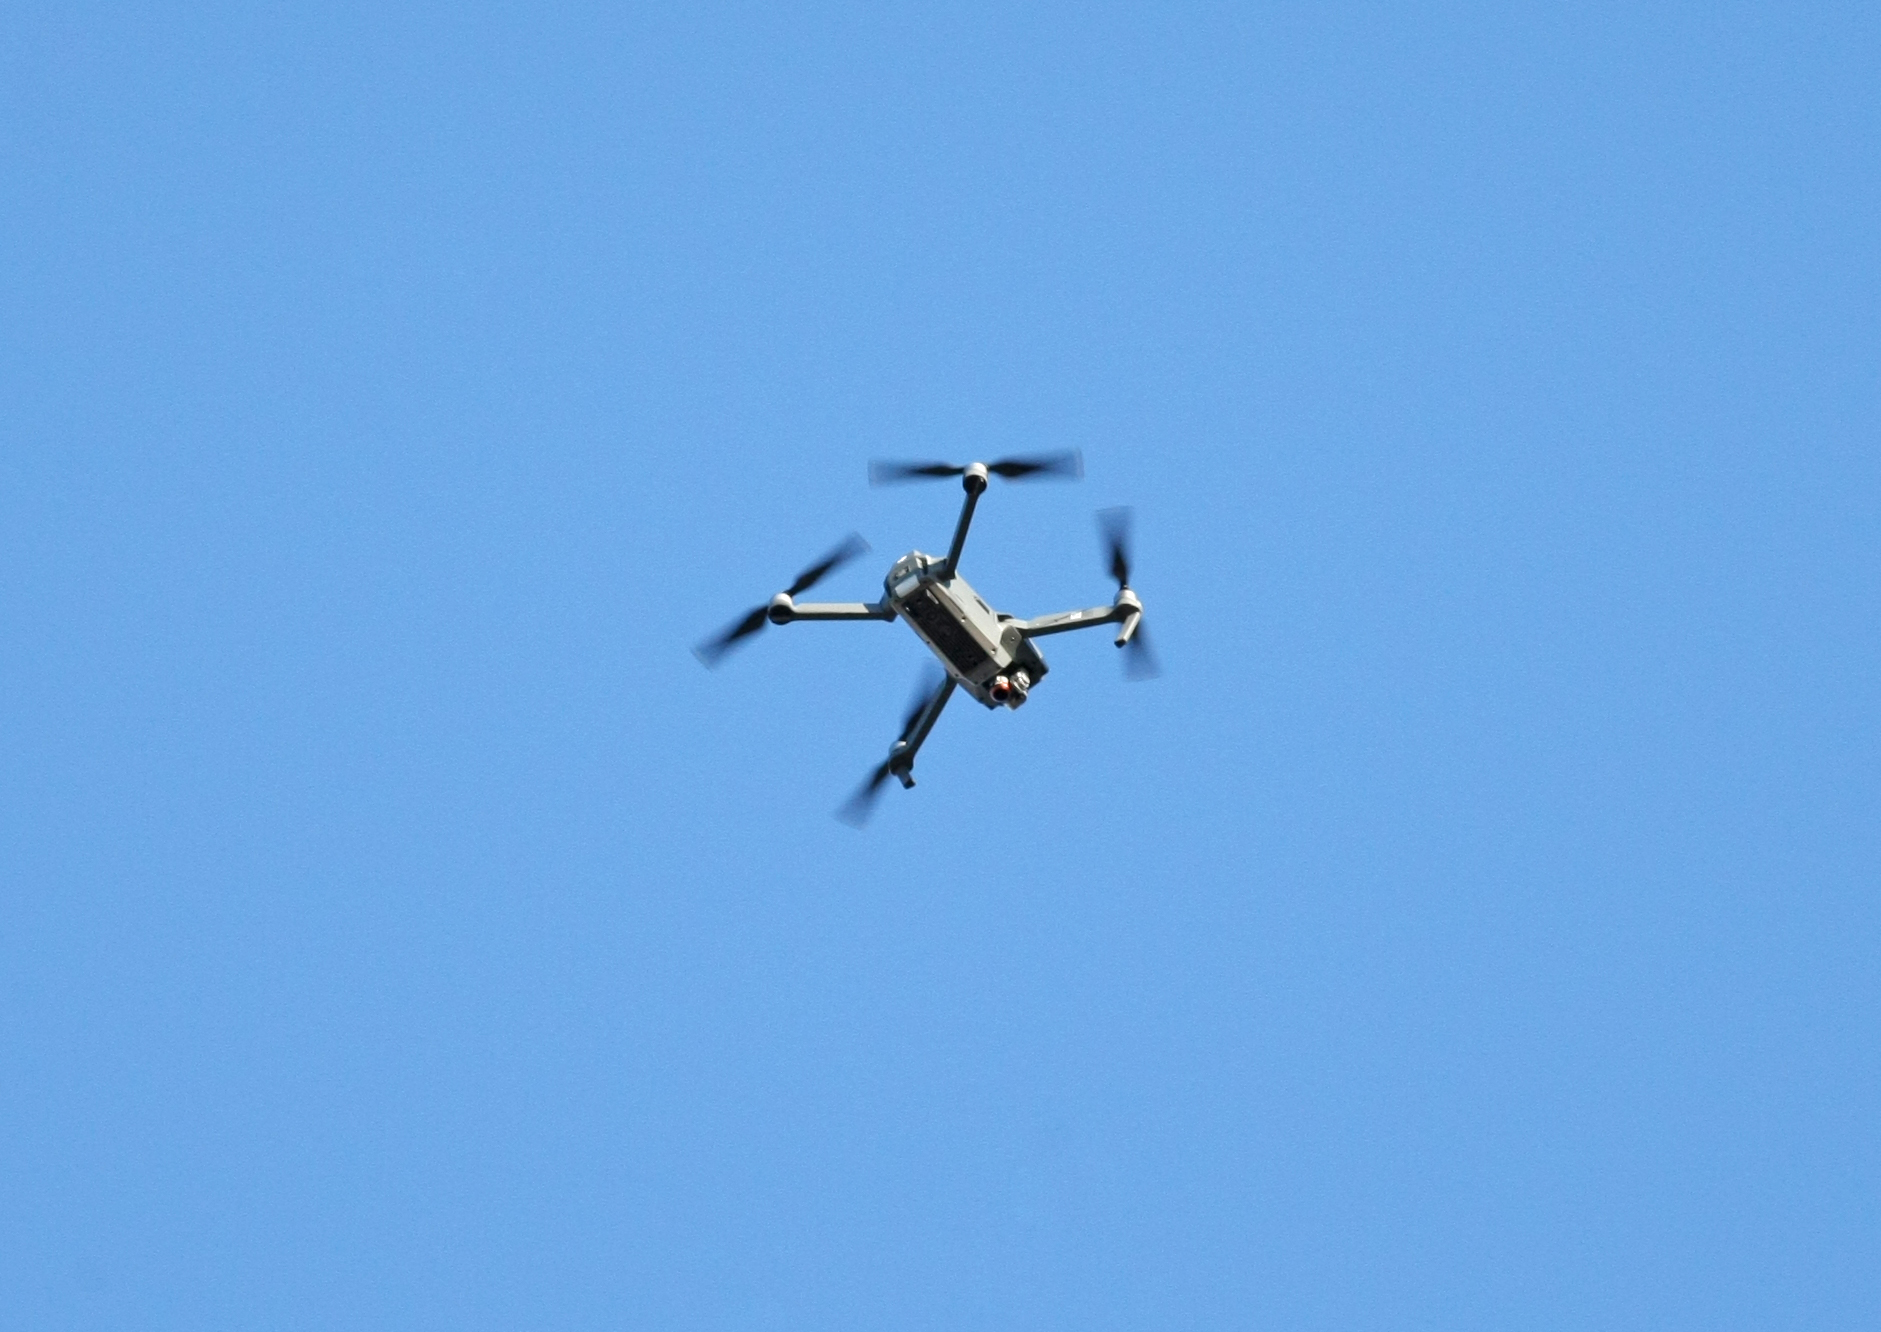 Tysk drone 19.03 2018 1. Henrik Knudsen